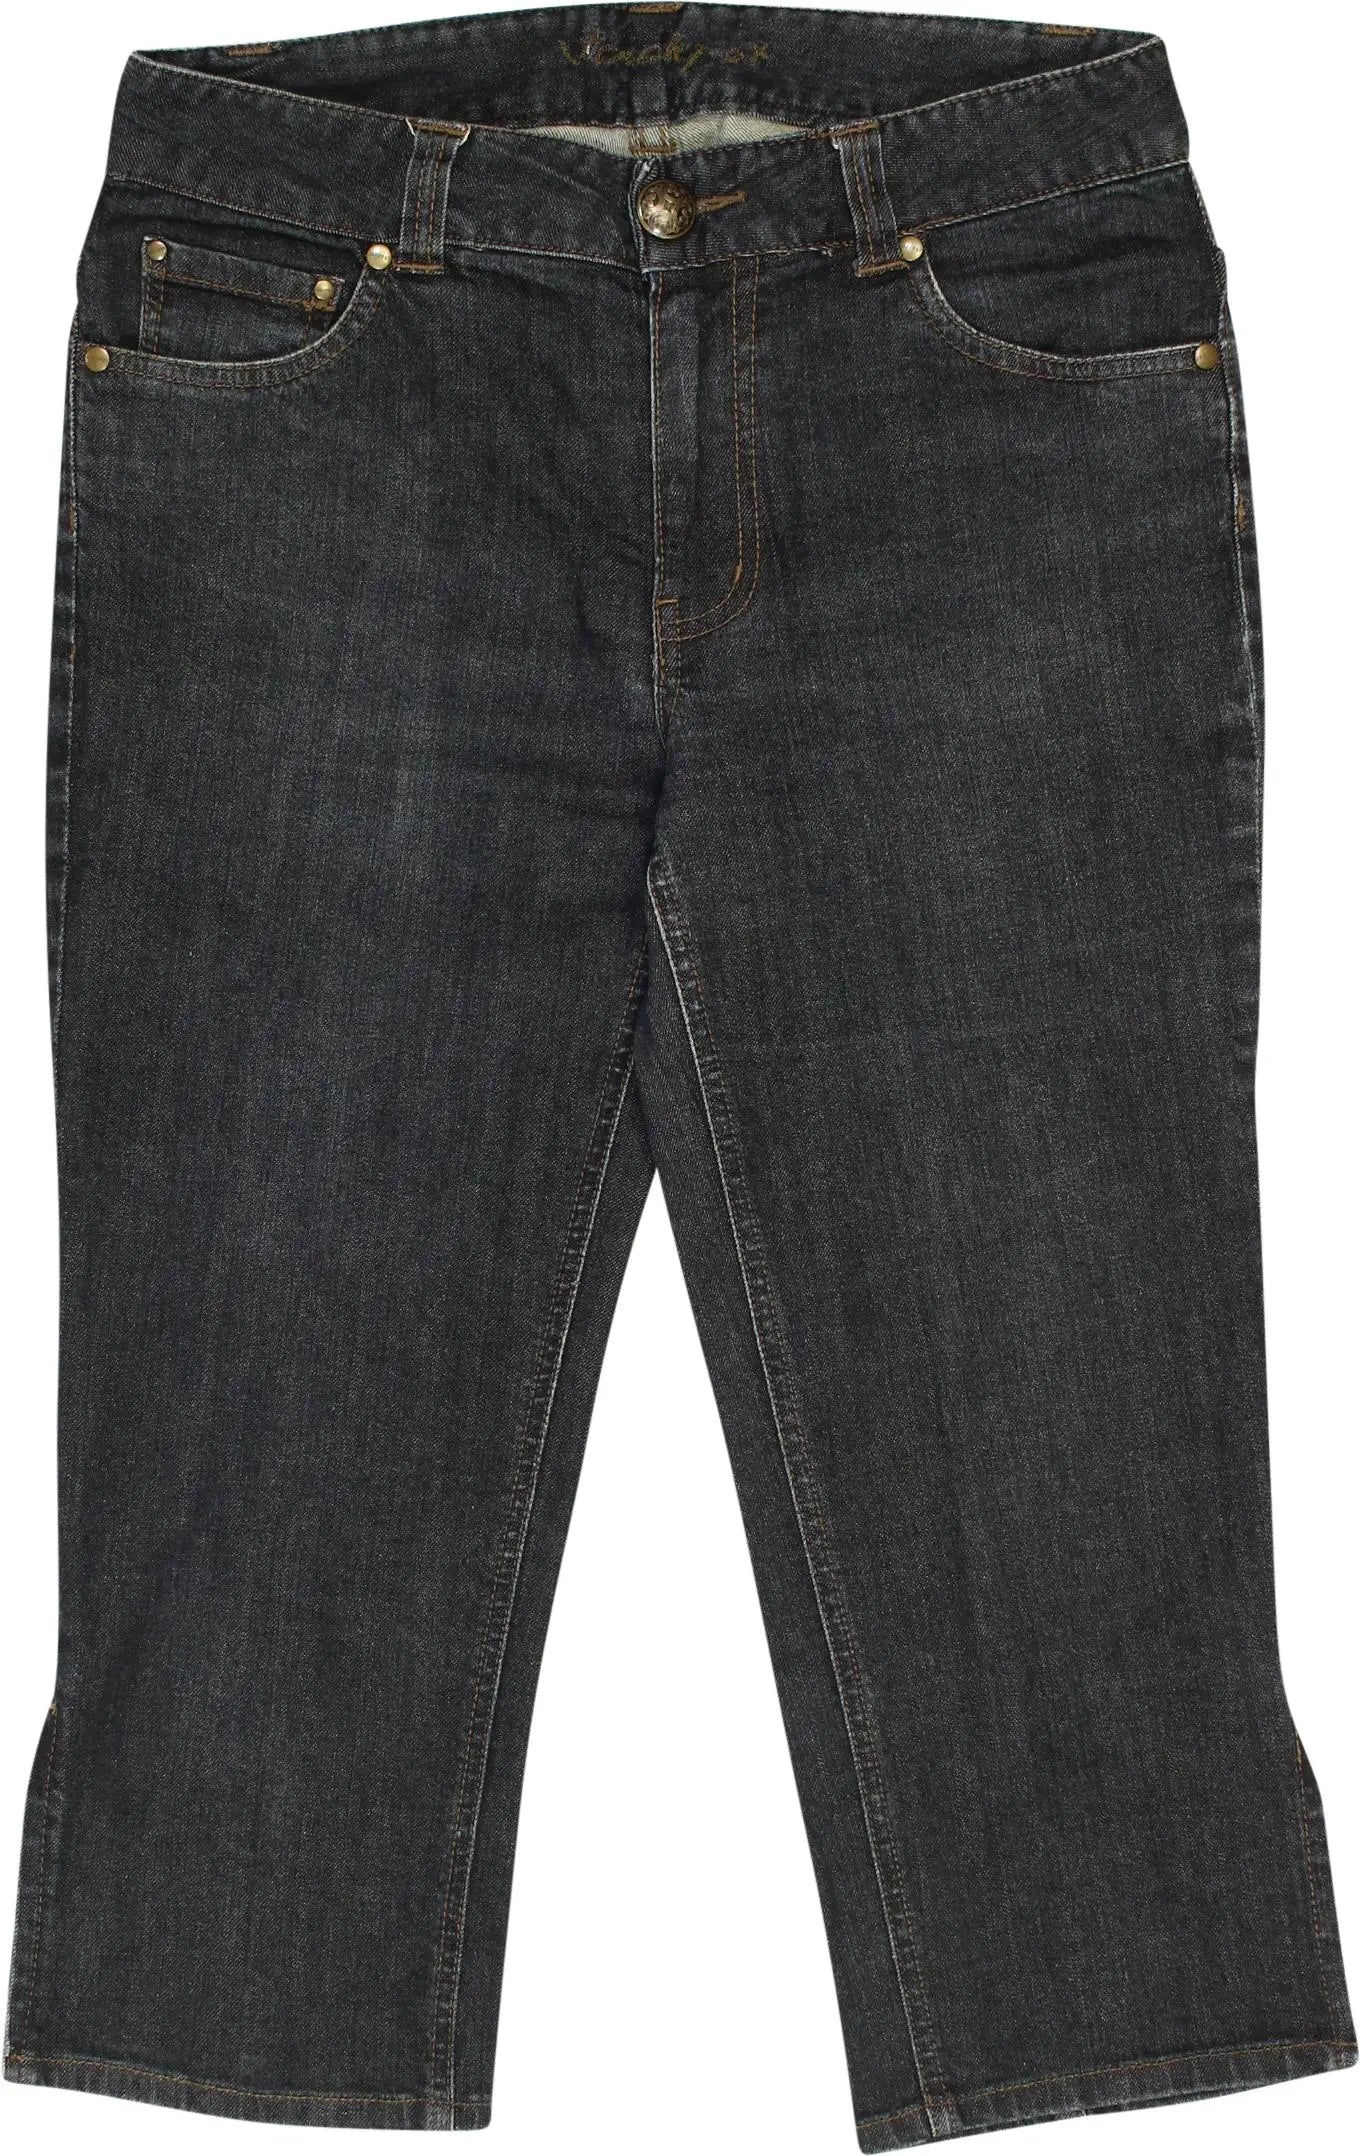 LEE Womens Riders Midrise Capri Trousers US 14 XL W34 L20 Blue Cotton, Vintage & Second-Hand Clothing Online